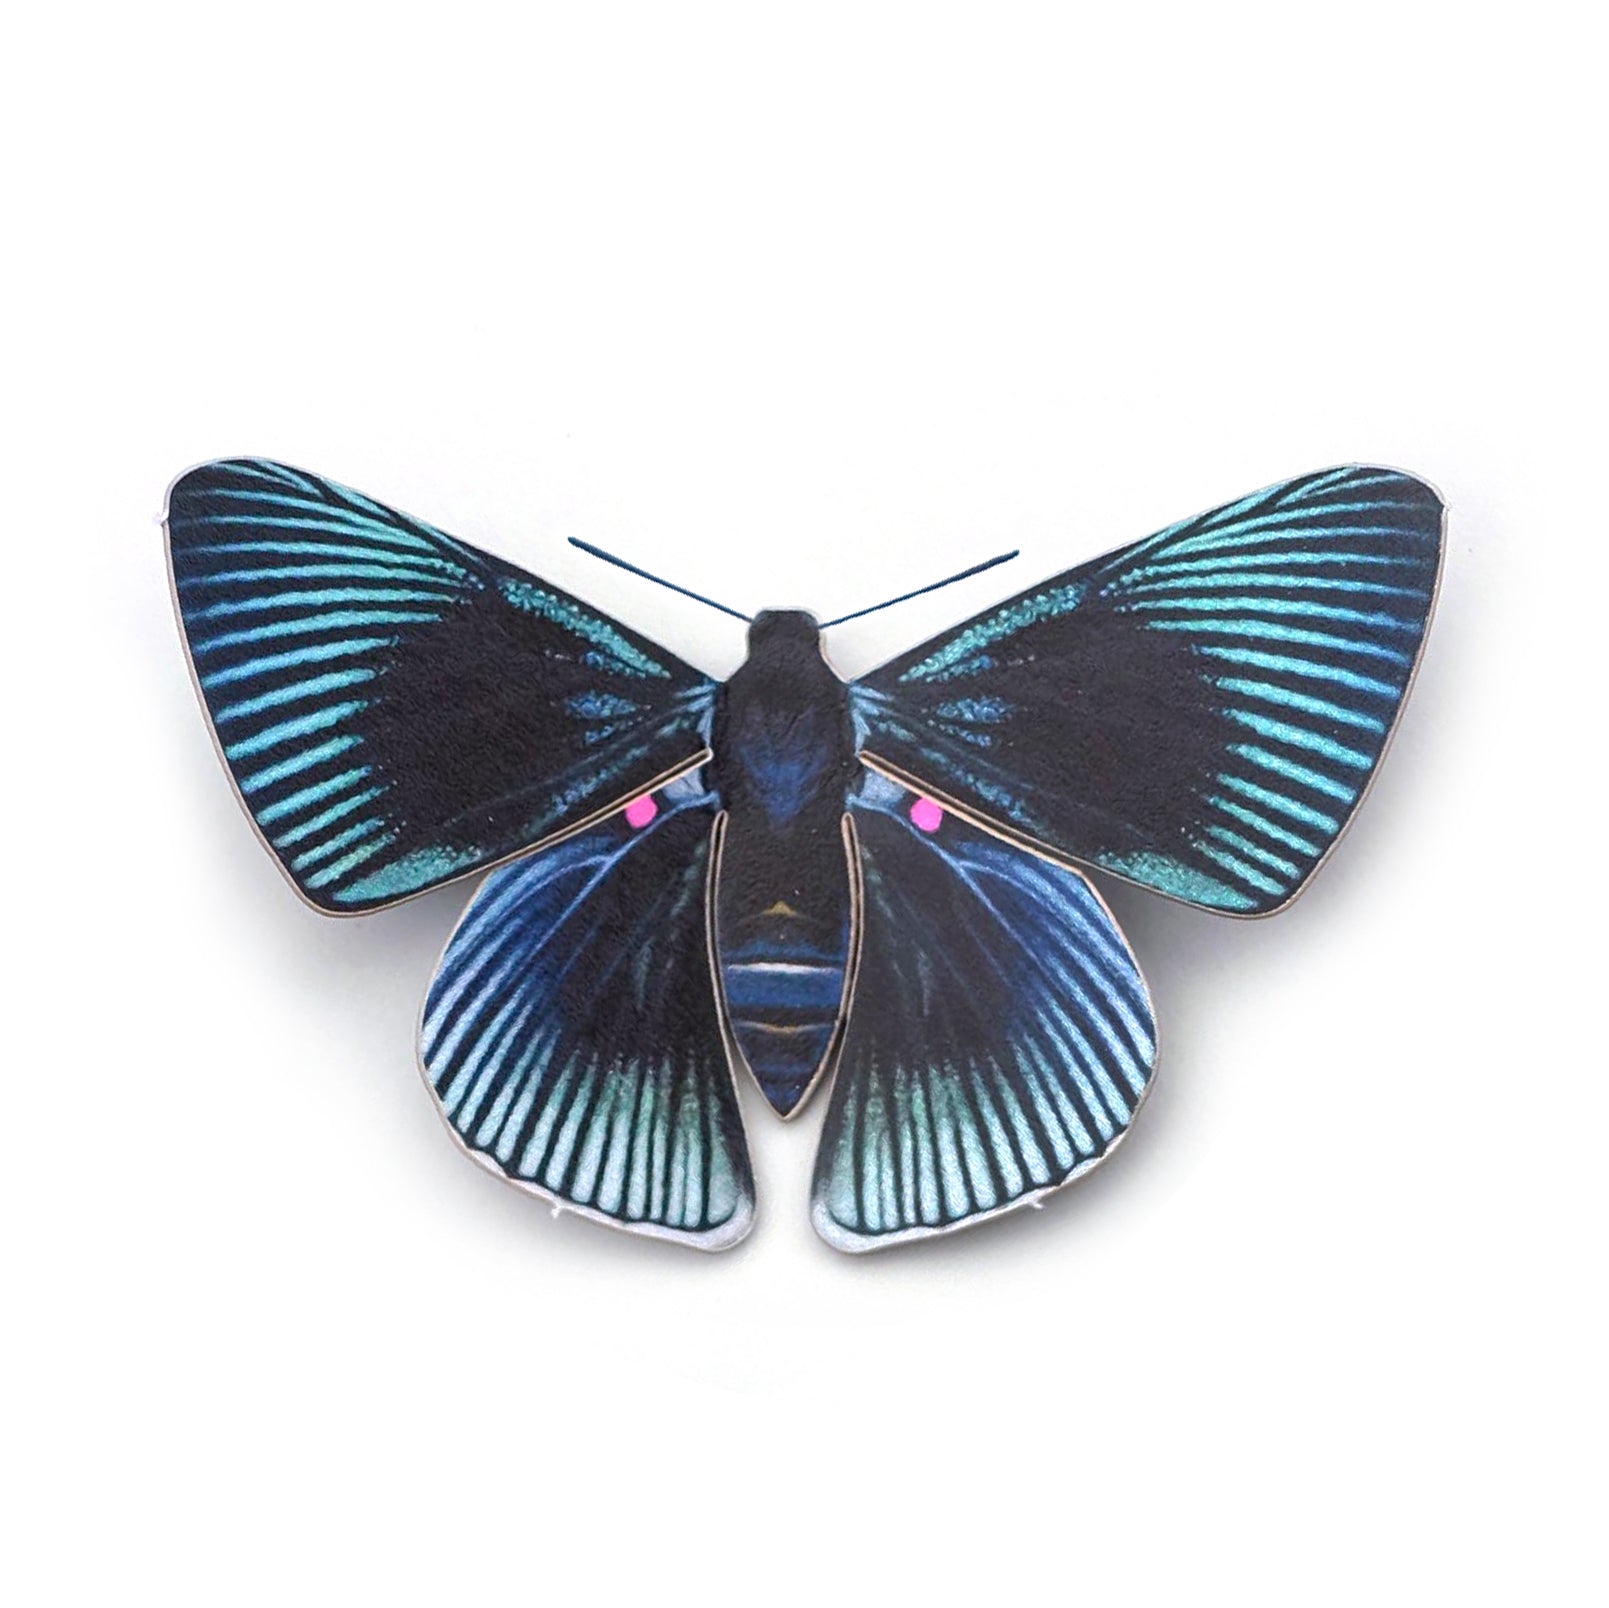 'Apollo Metalmark' Butterfly